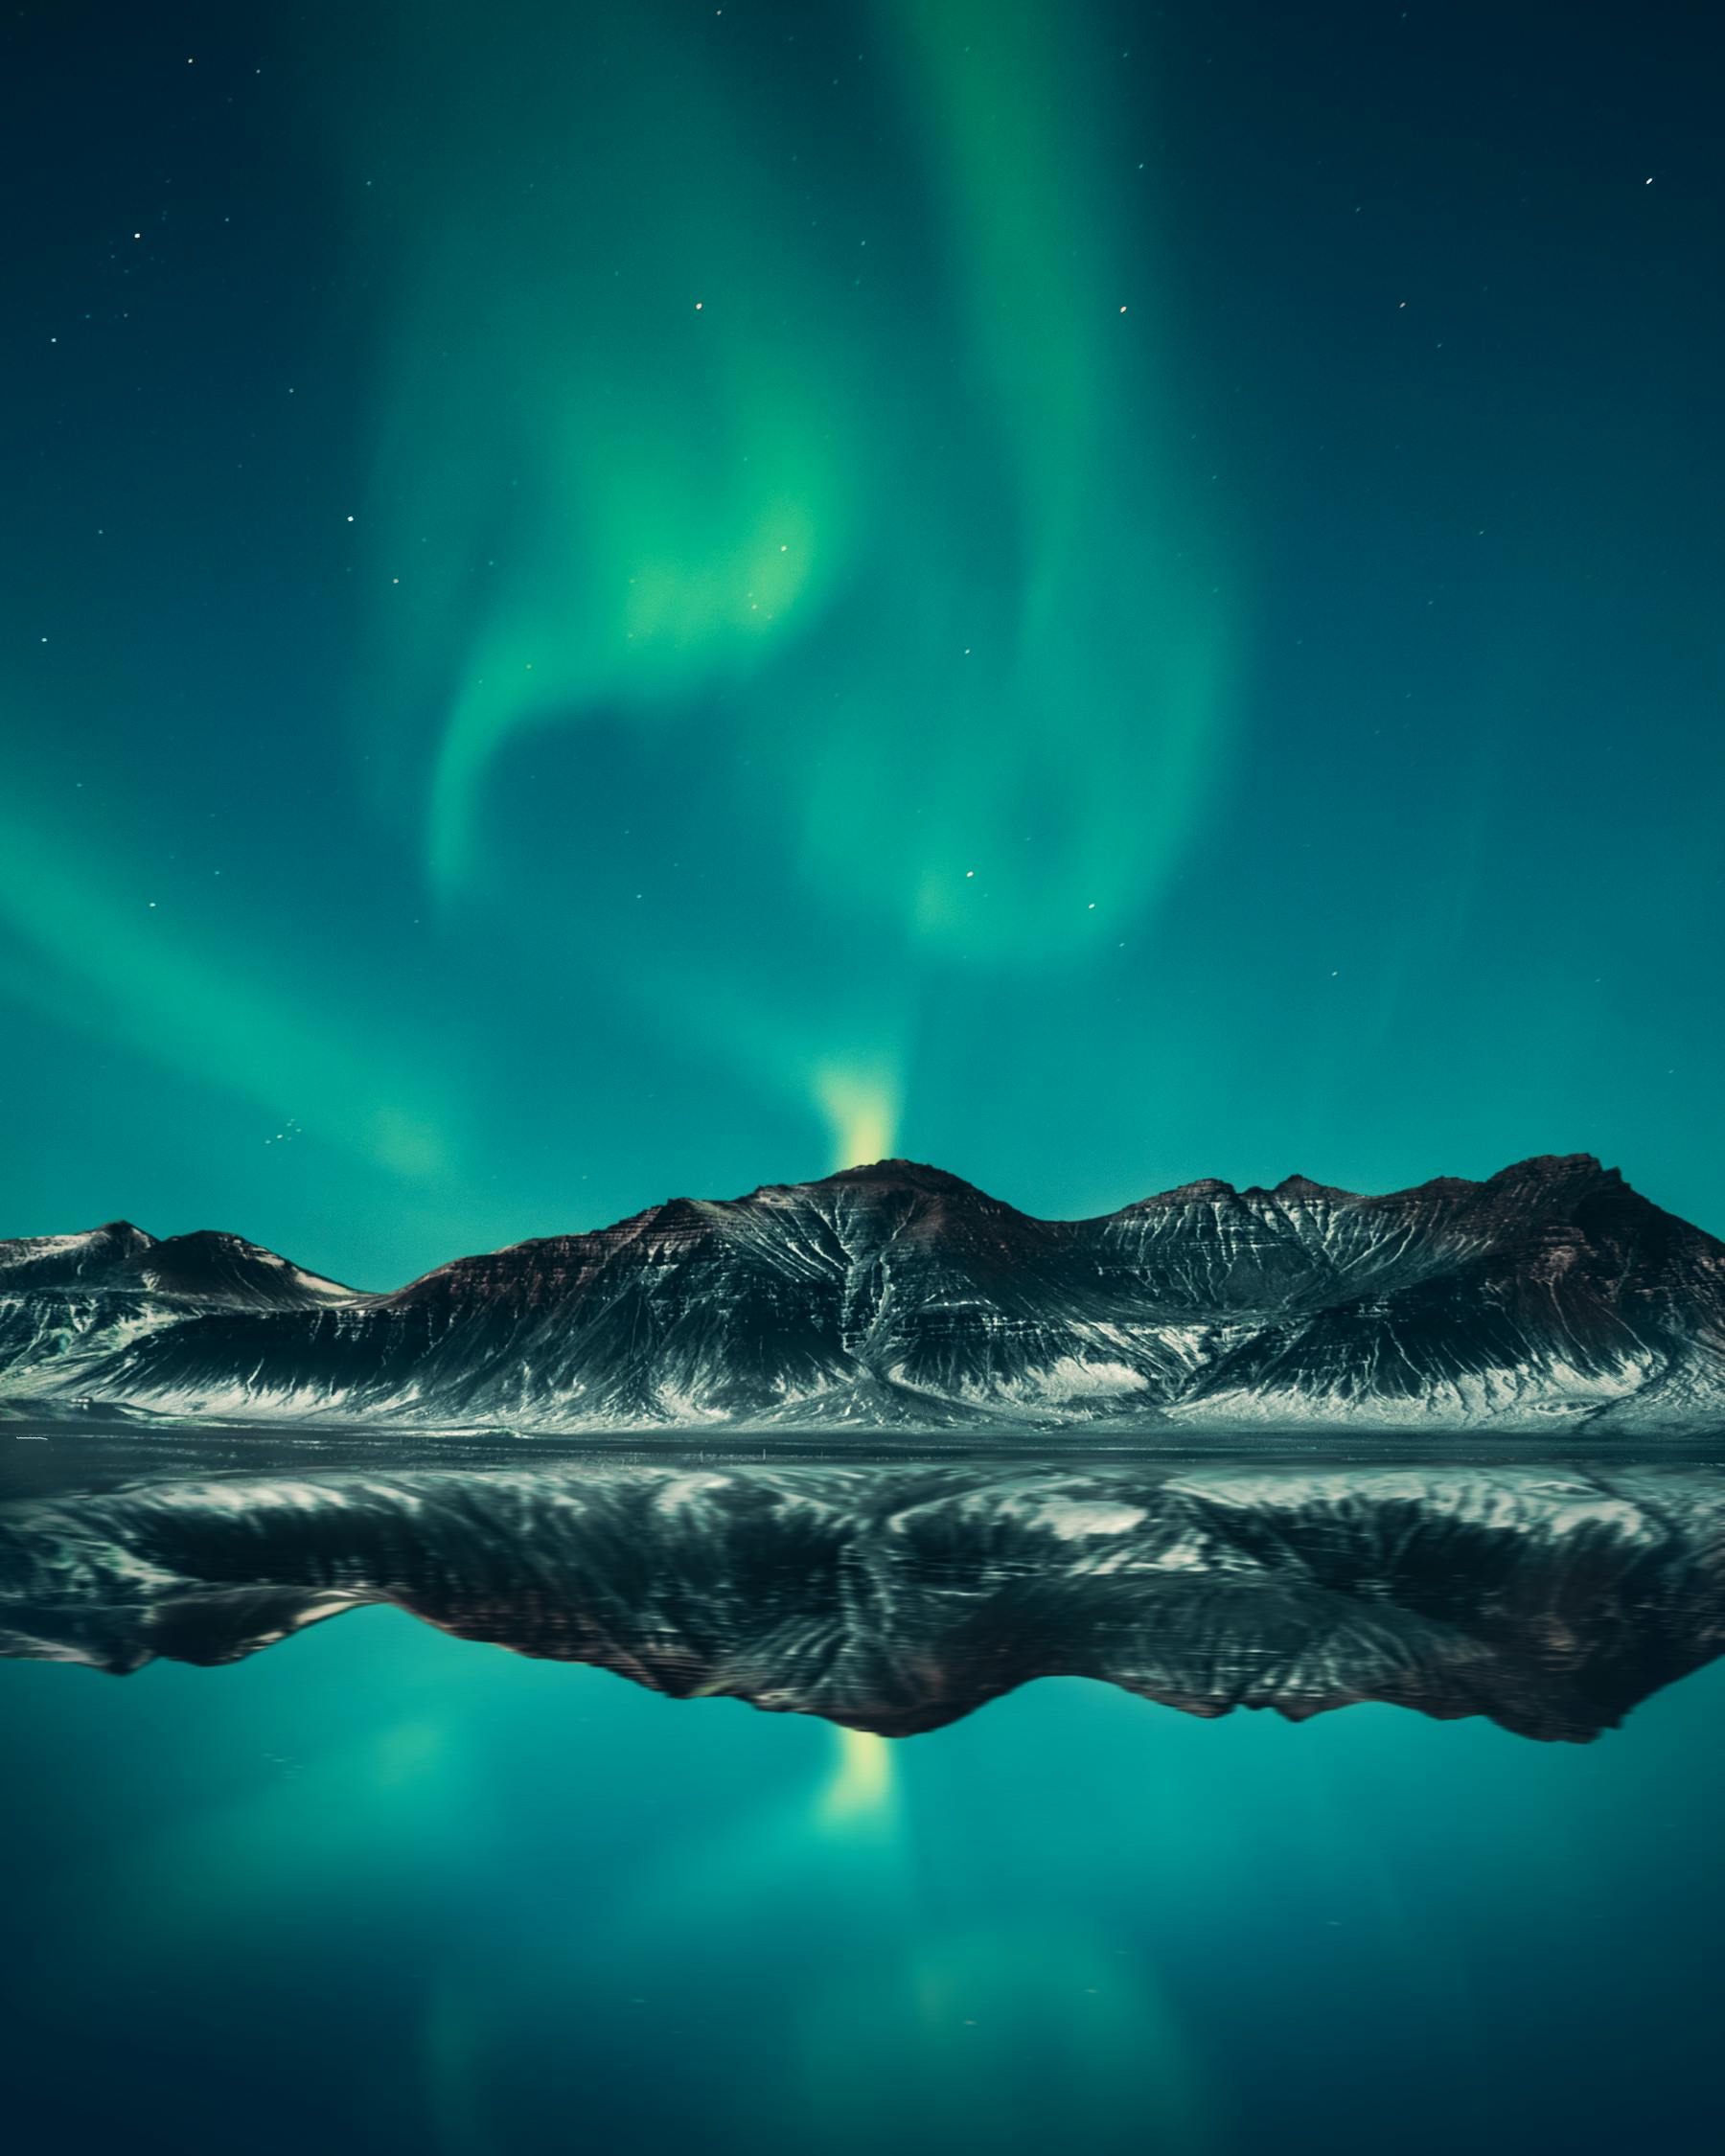 Aurora Burealis over Iceland's icy mountains